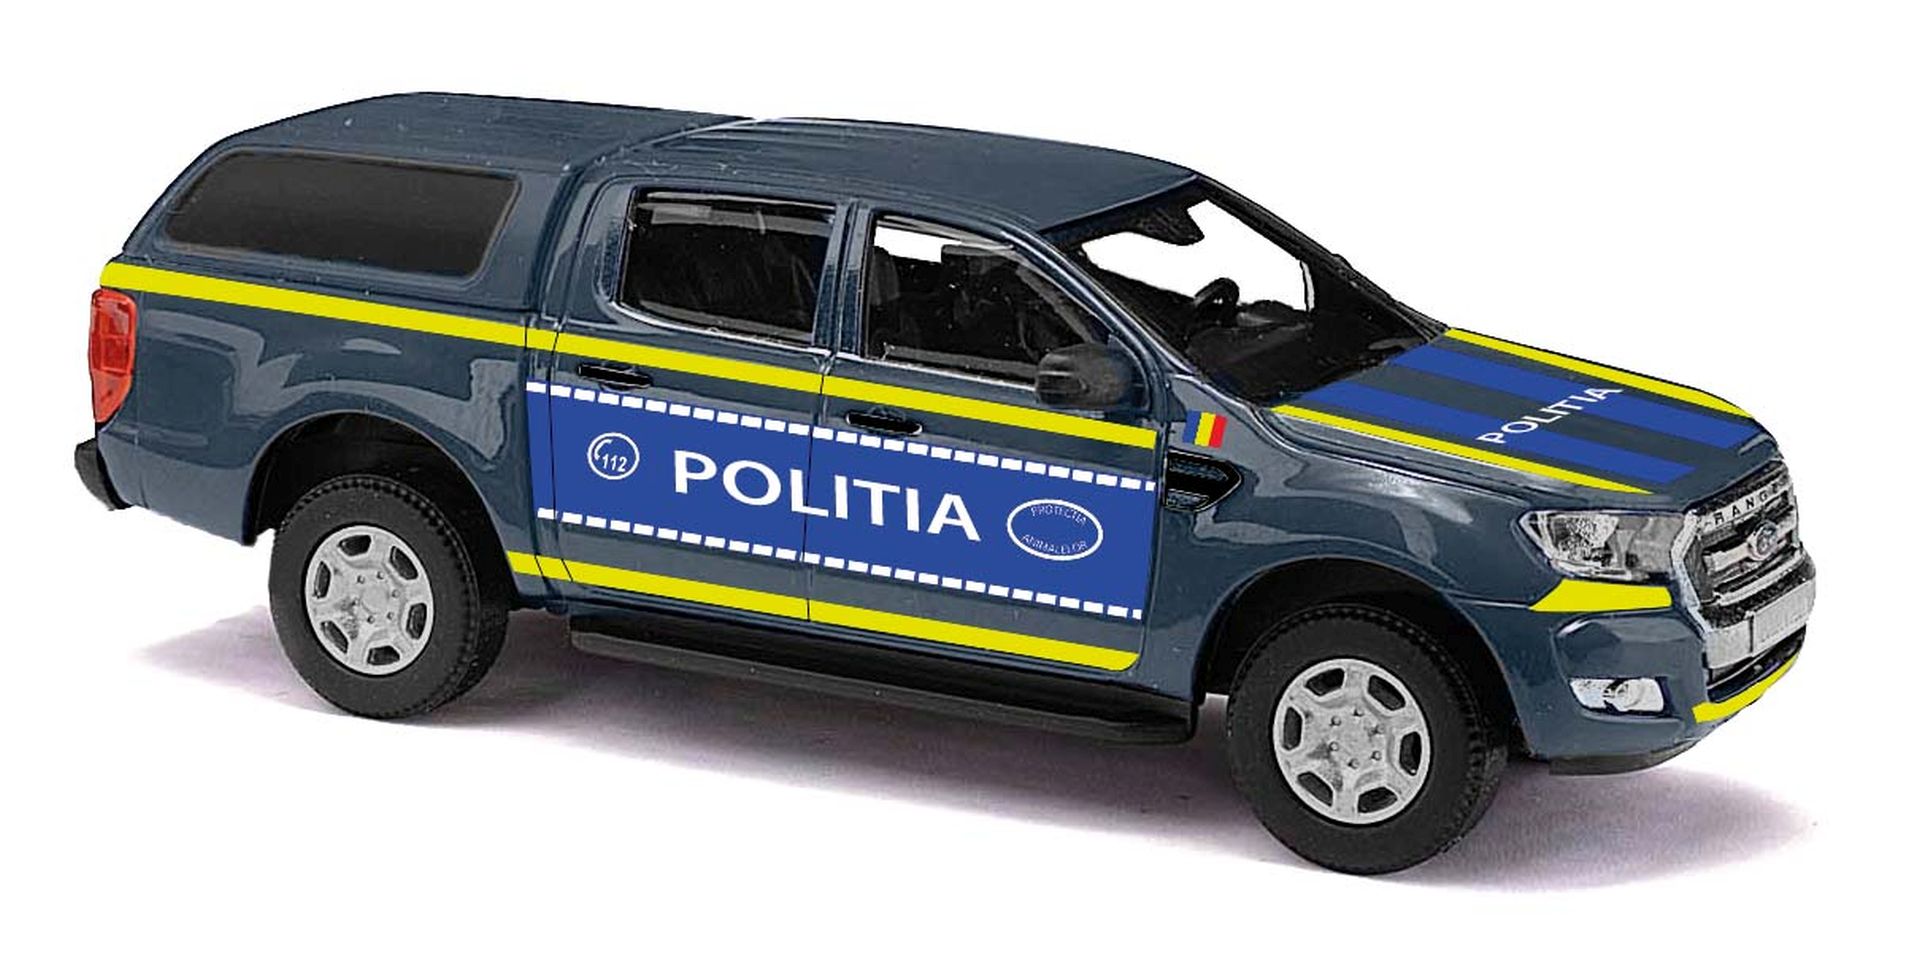 Busch 52836 - Ford Ranger mit Hardtop Politia Rumänien, Bj. 2016